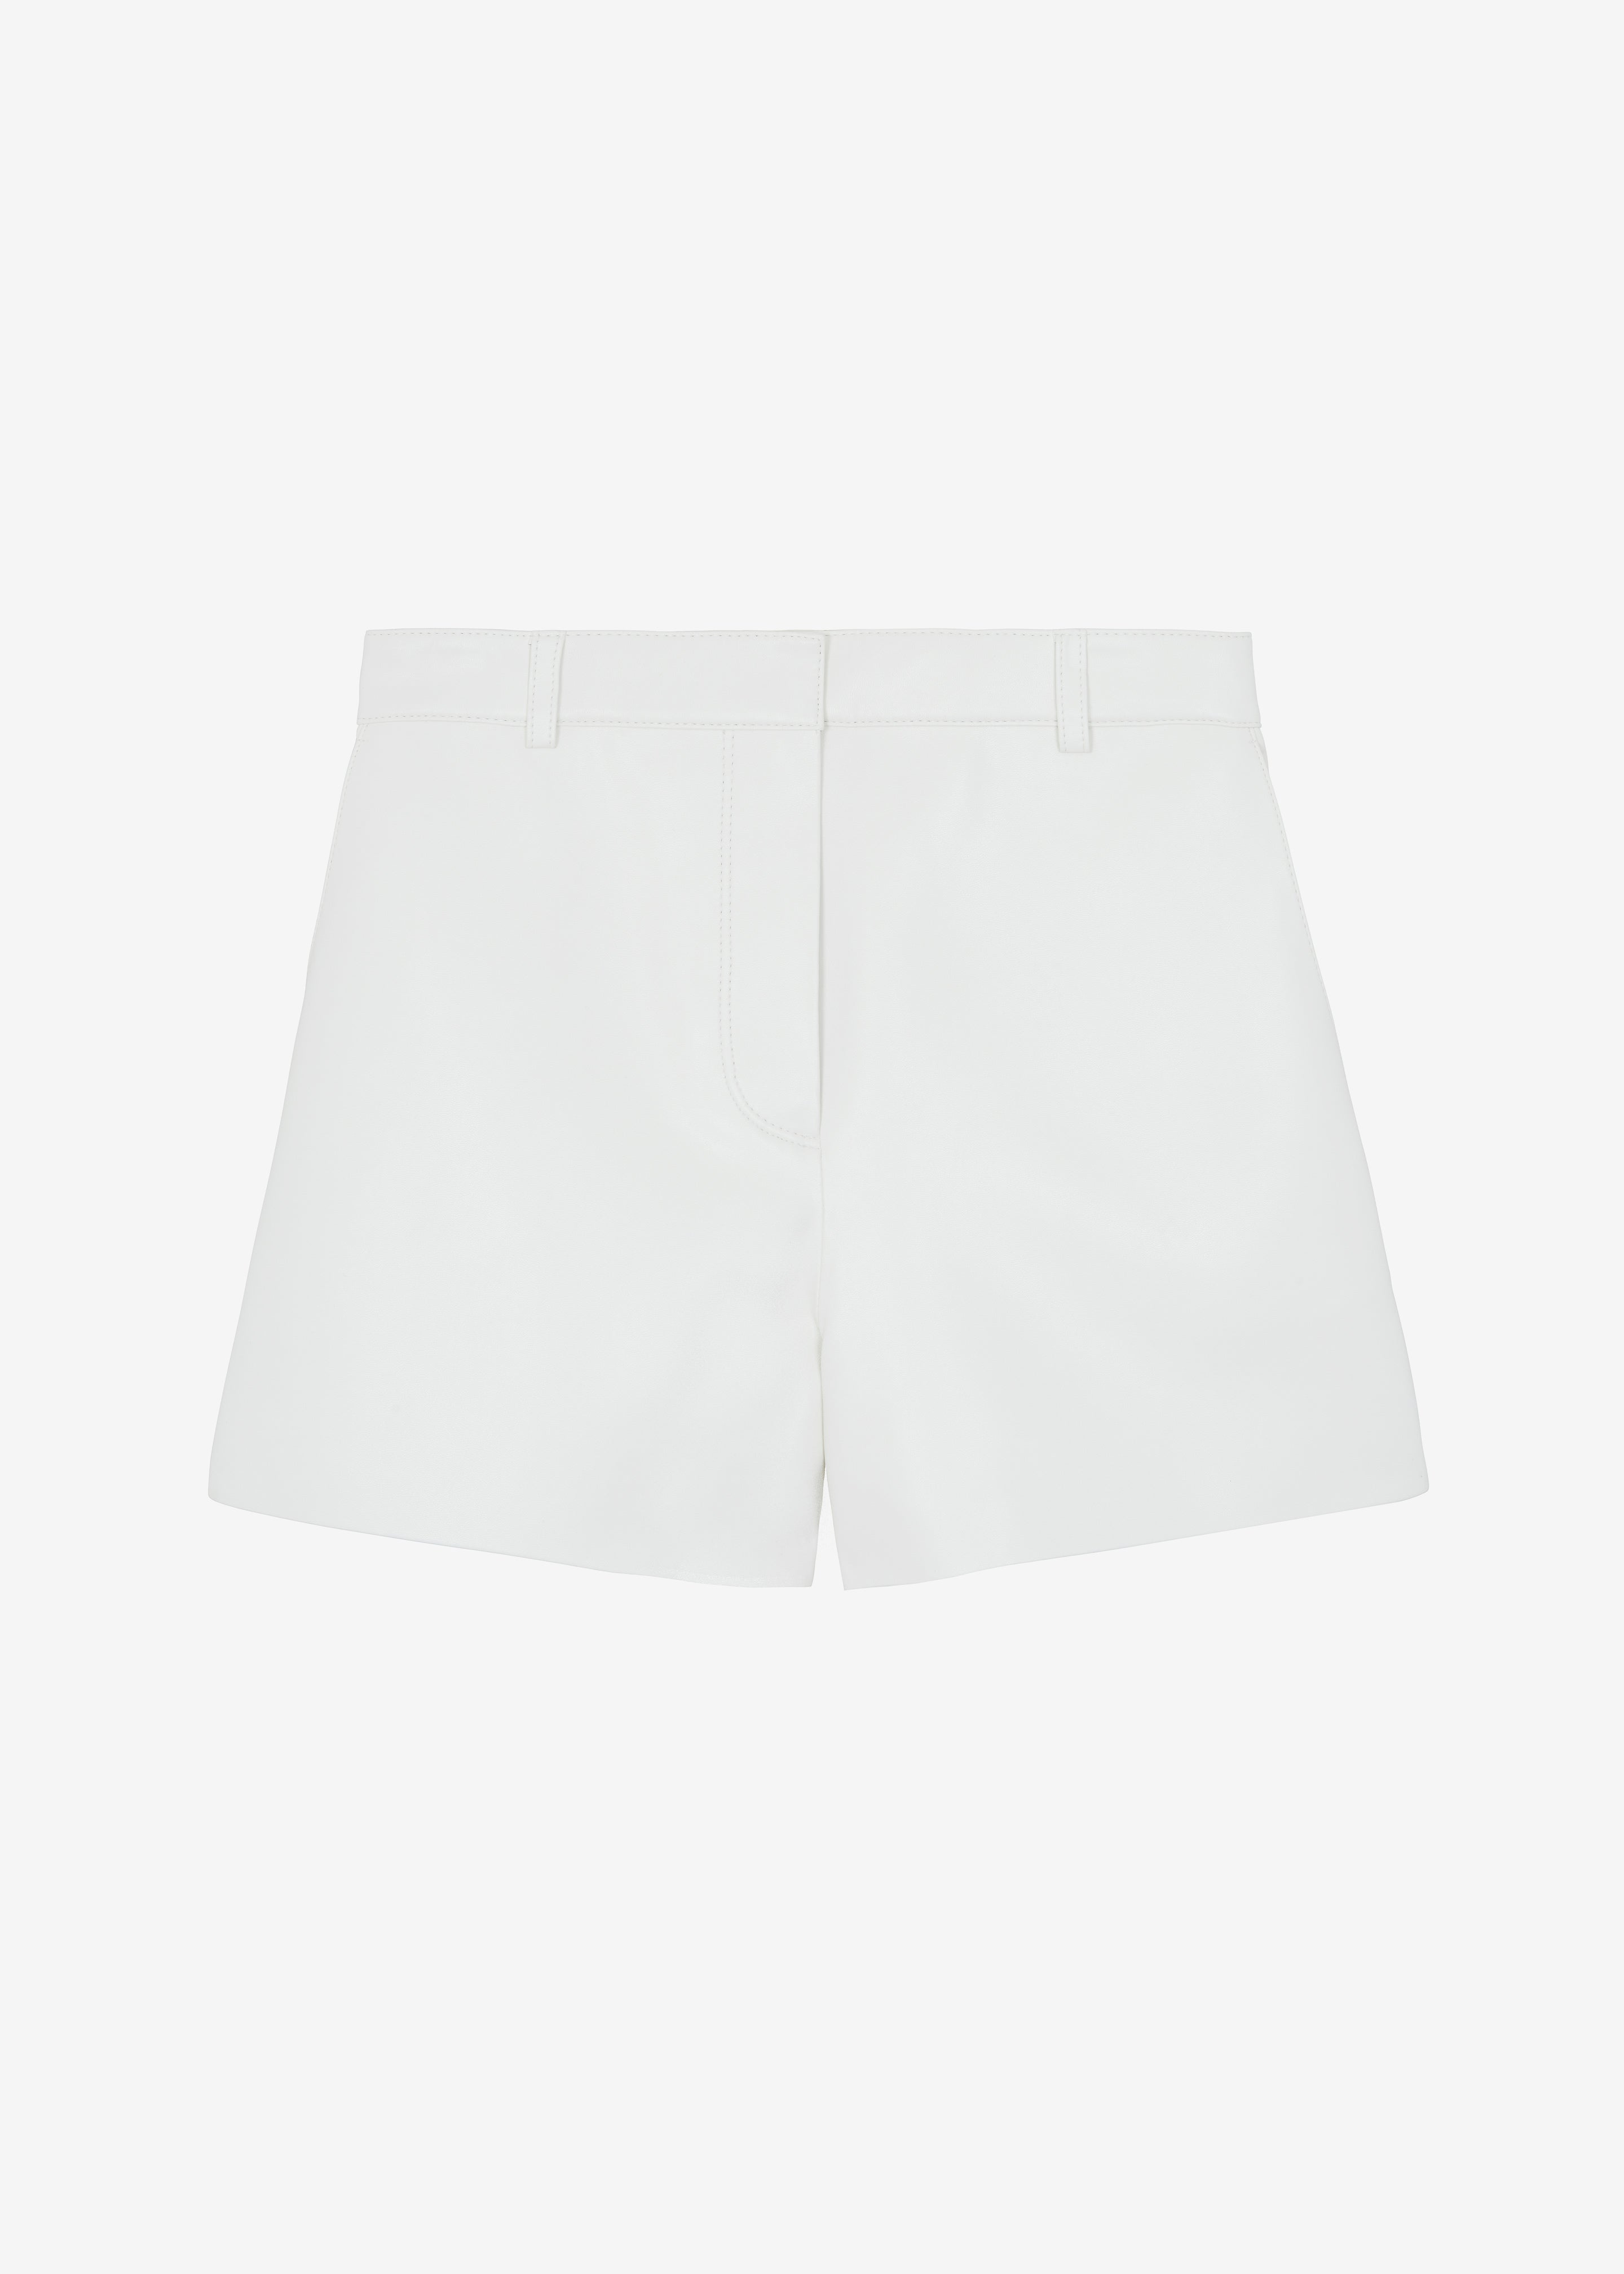 Cassie Faux Leather Mini Shorts - White - 9